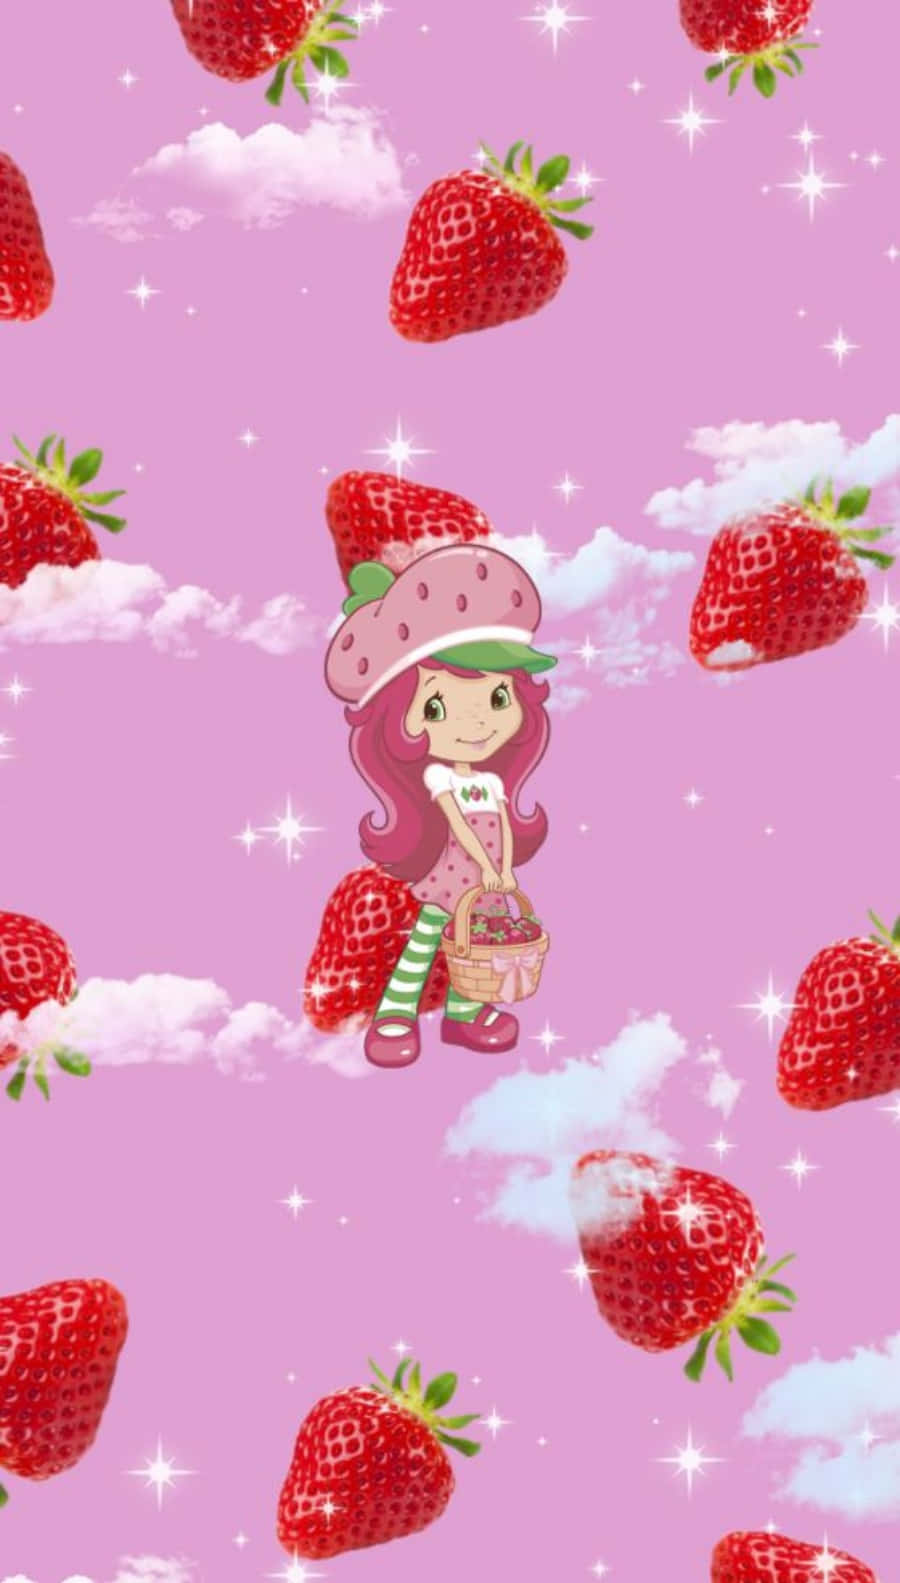 Strawberry Shortcake: Berry Rush para iPhone - Download